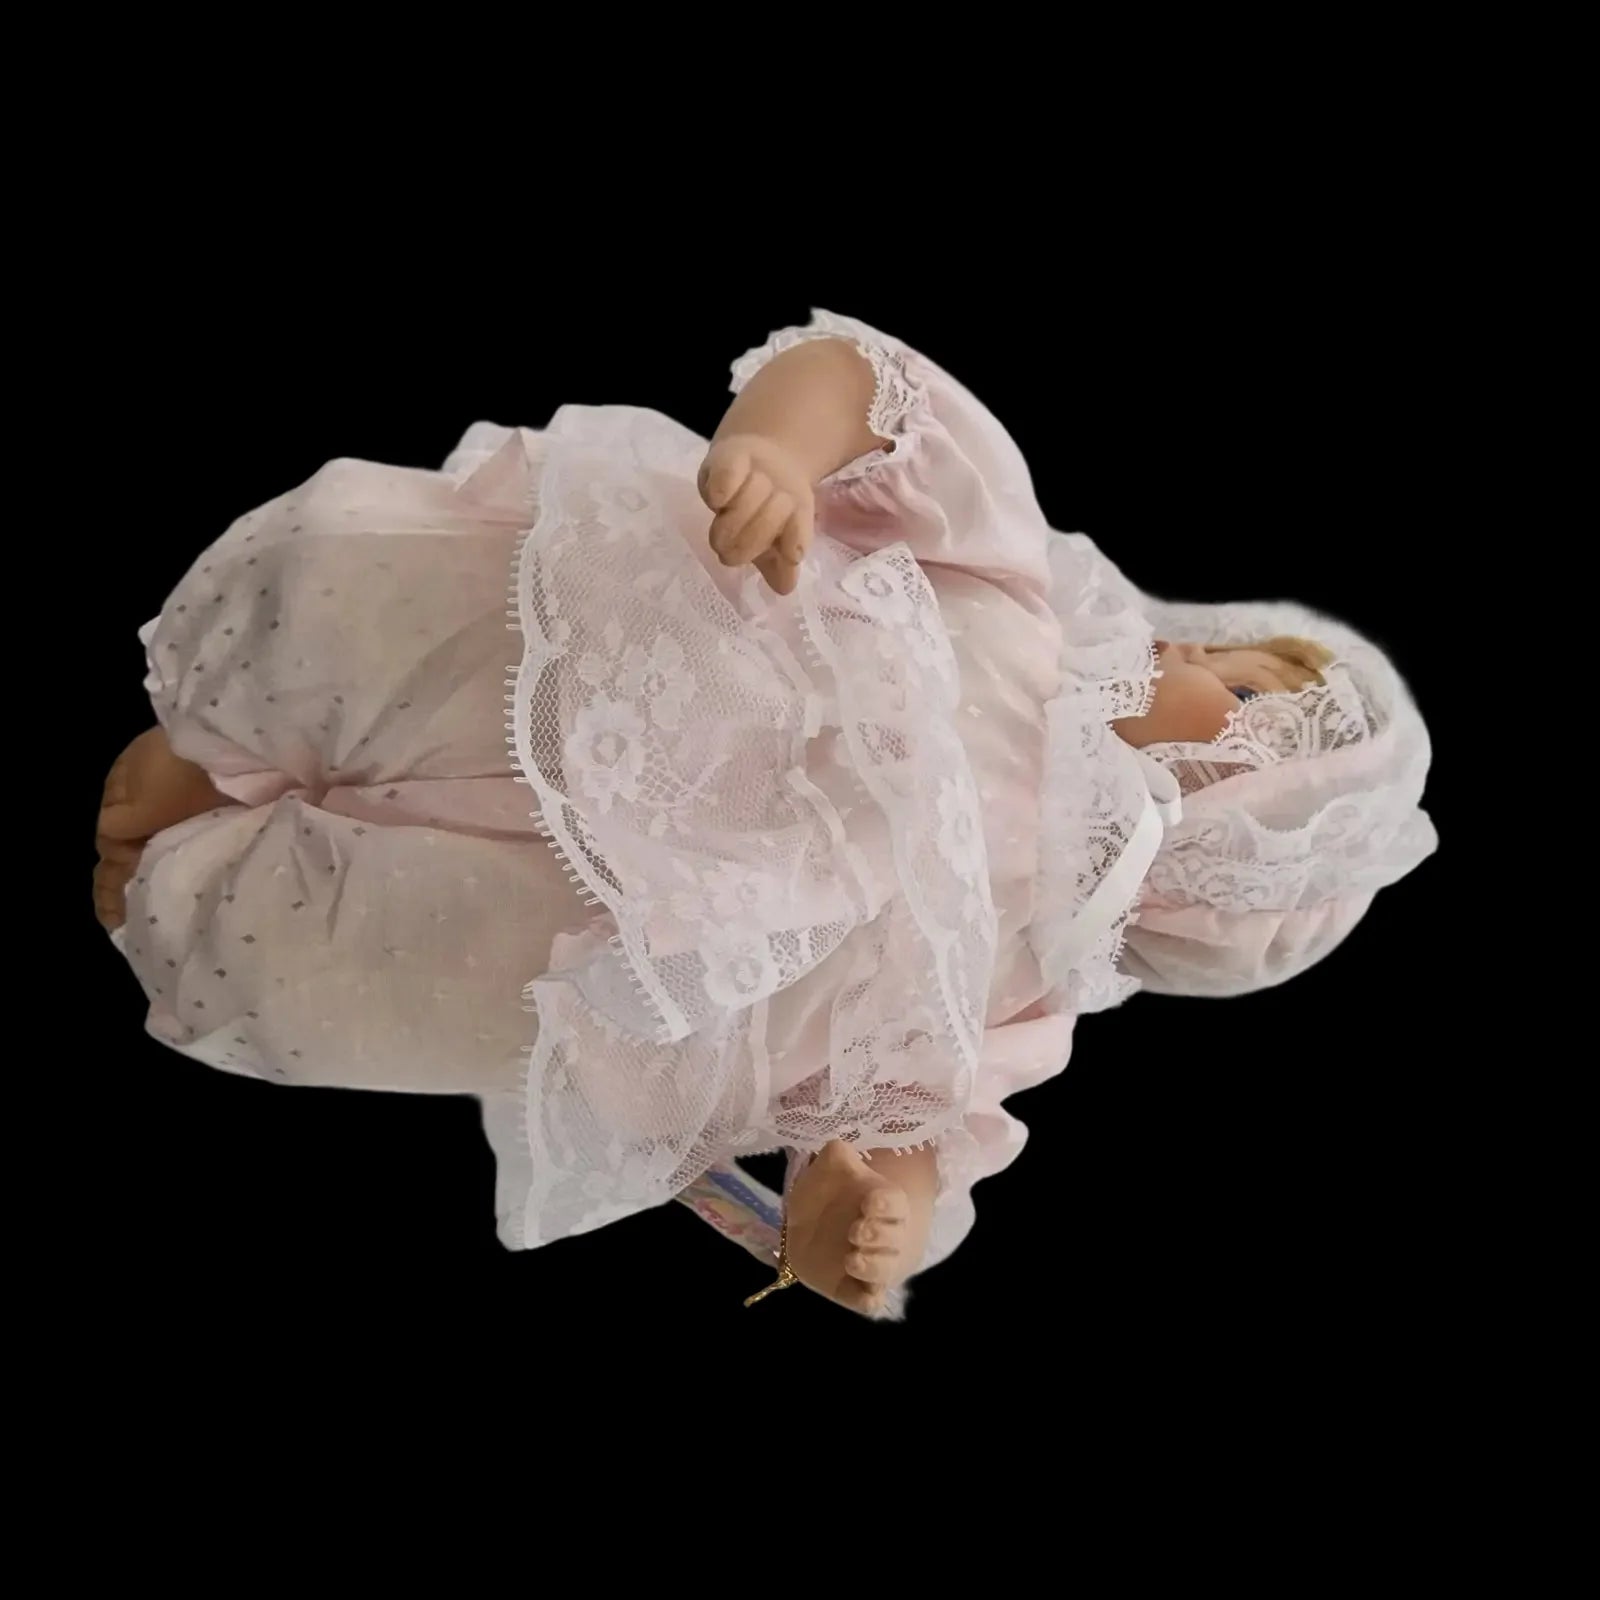 Girl Crawling Baby Doll Eugeine Fine Bisque Porcelain